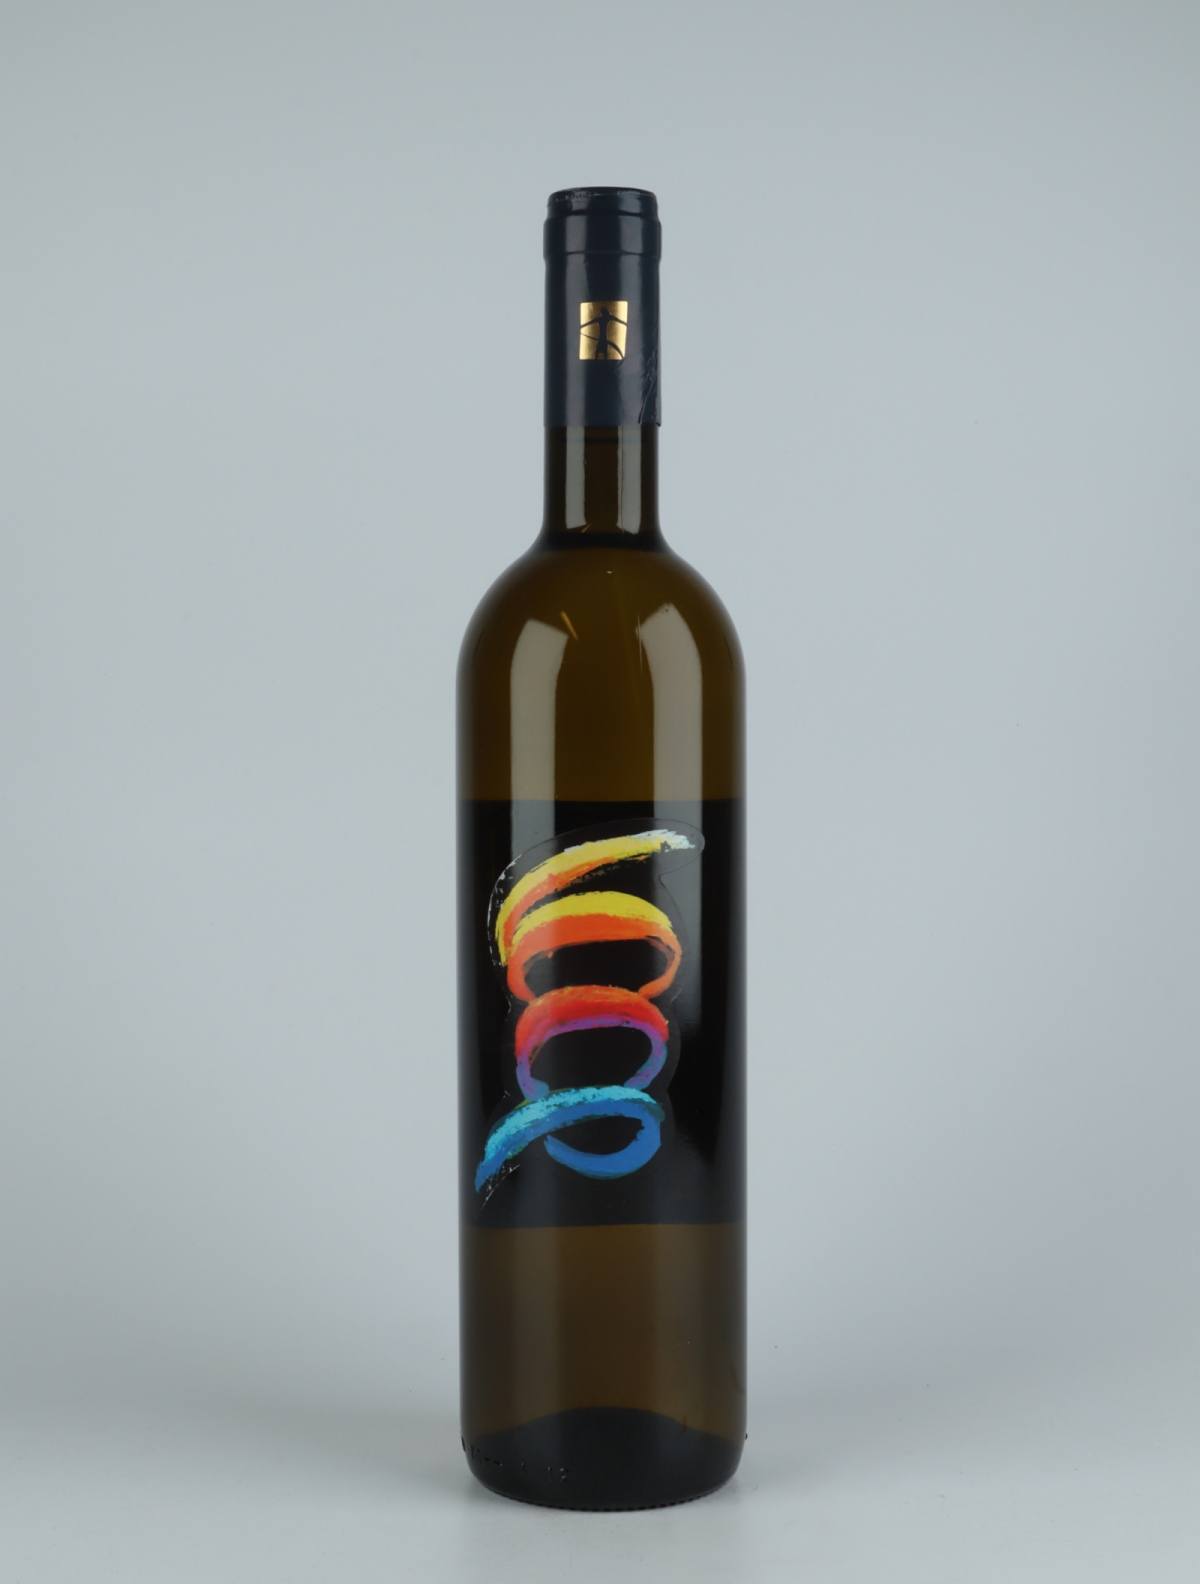 A bottle 2019 Rebosso White wine from Tenuta Selvadolce, Liguria in Italy